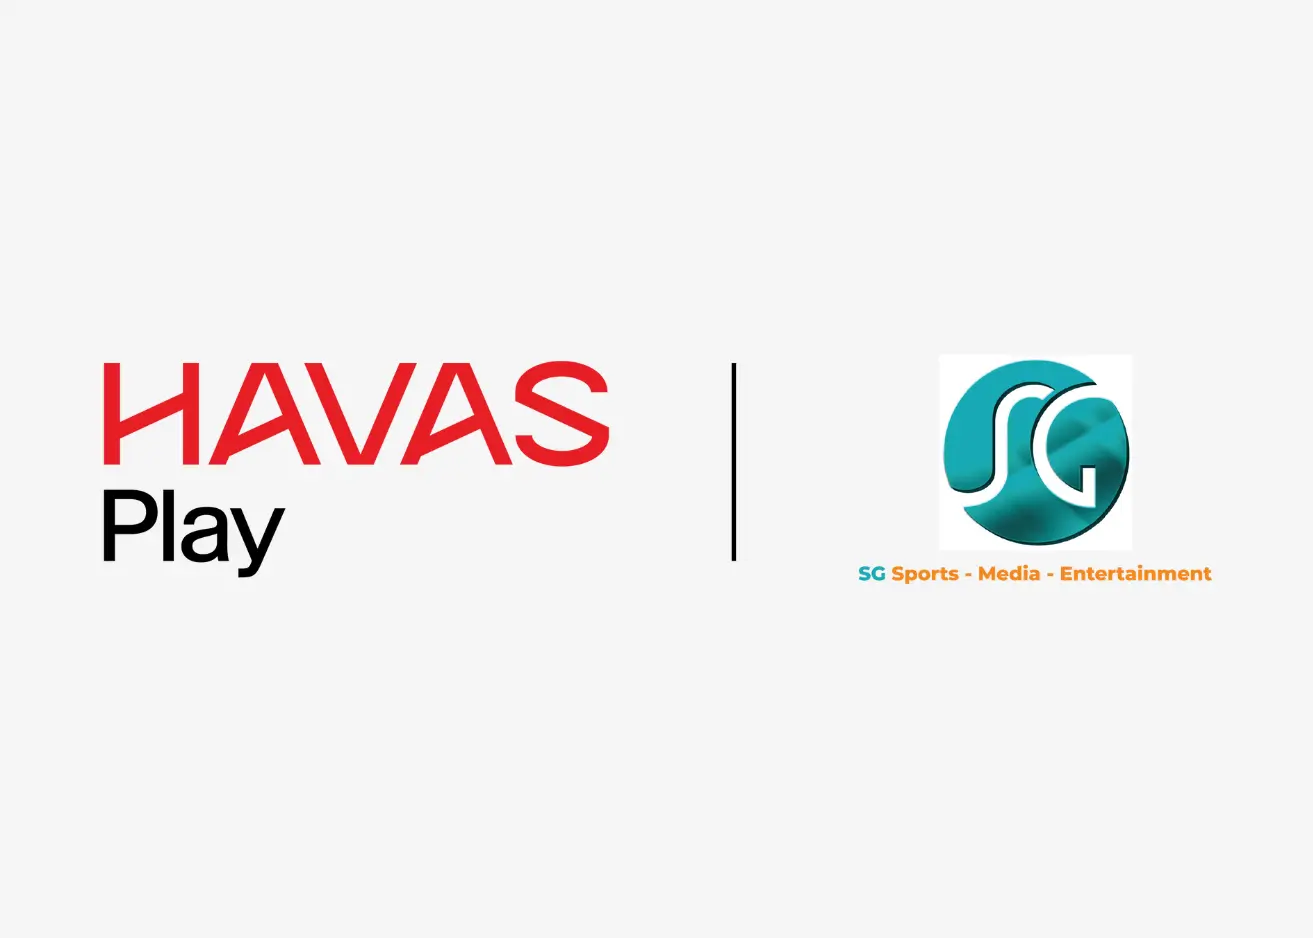 Havas Play Partners With Mahesh Bhupathi-Led SG Sports, Media & Entertainment